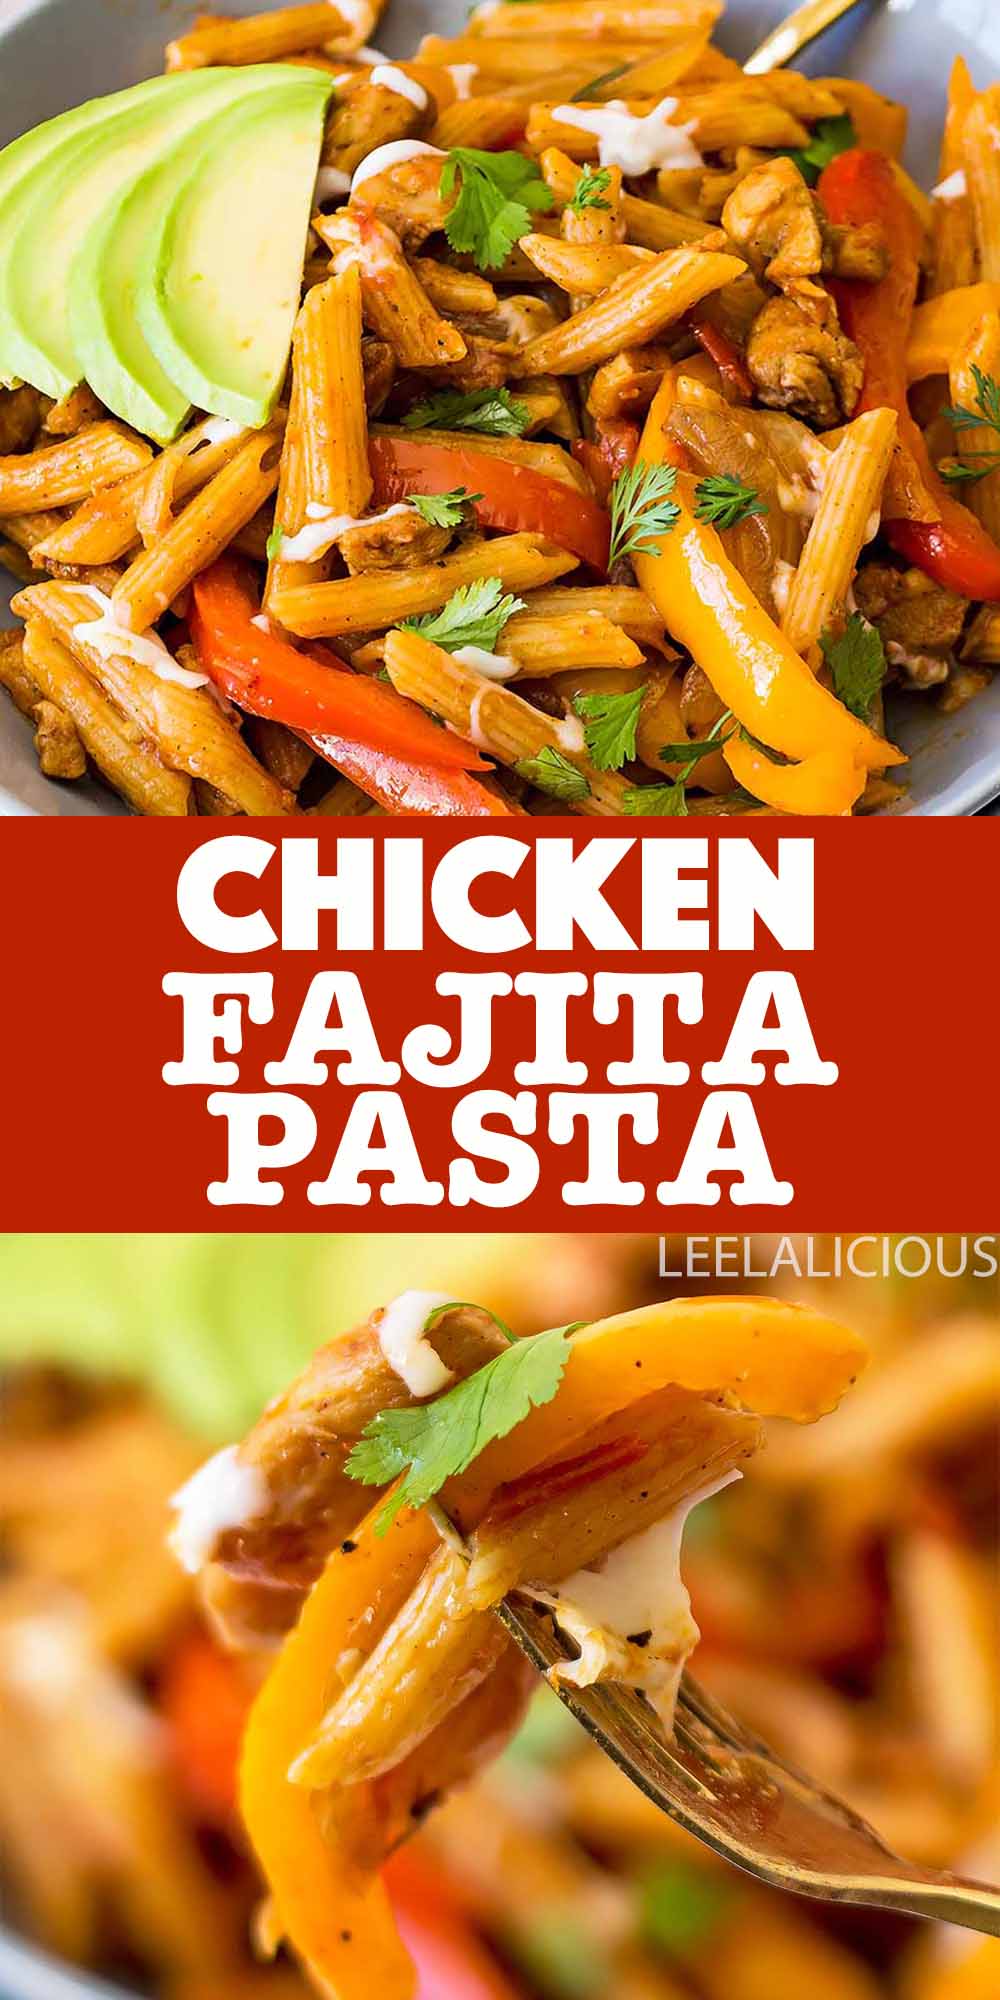 Chicken Fajita Pasta in plate and on fork